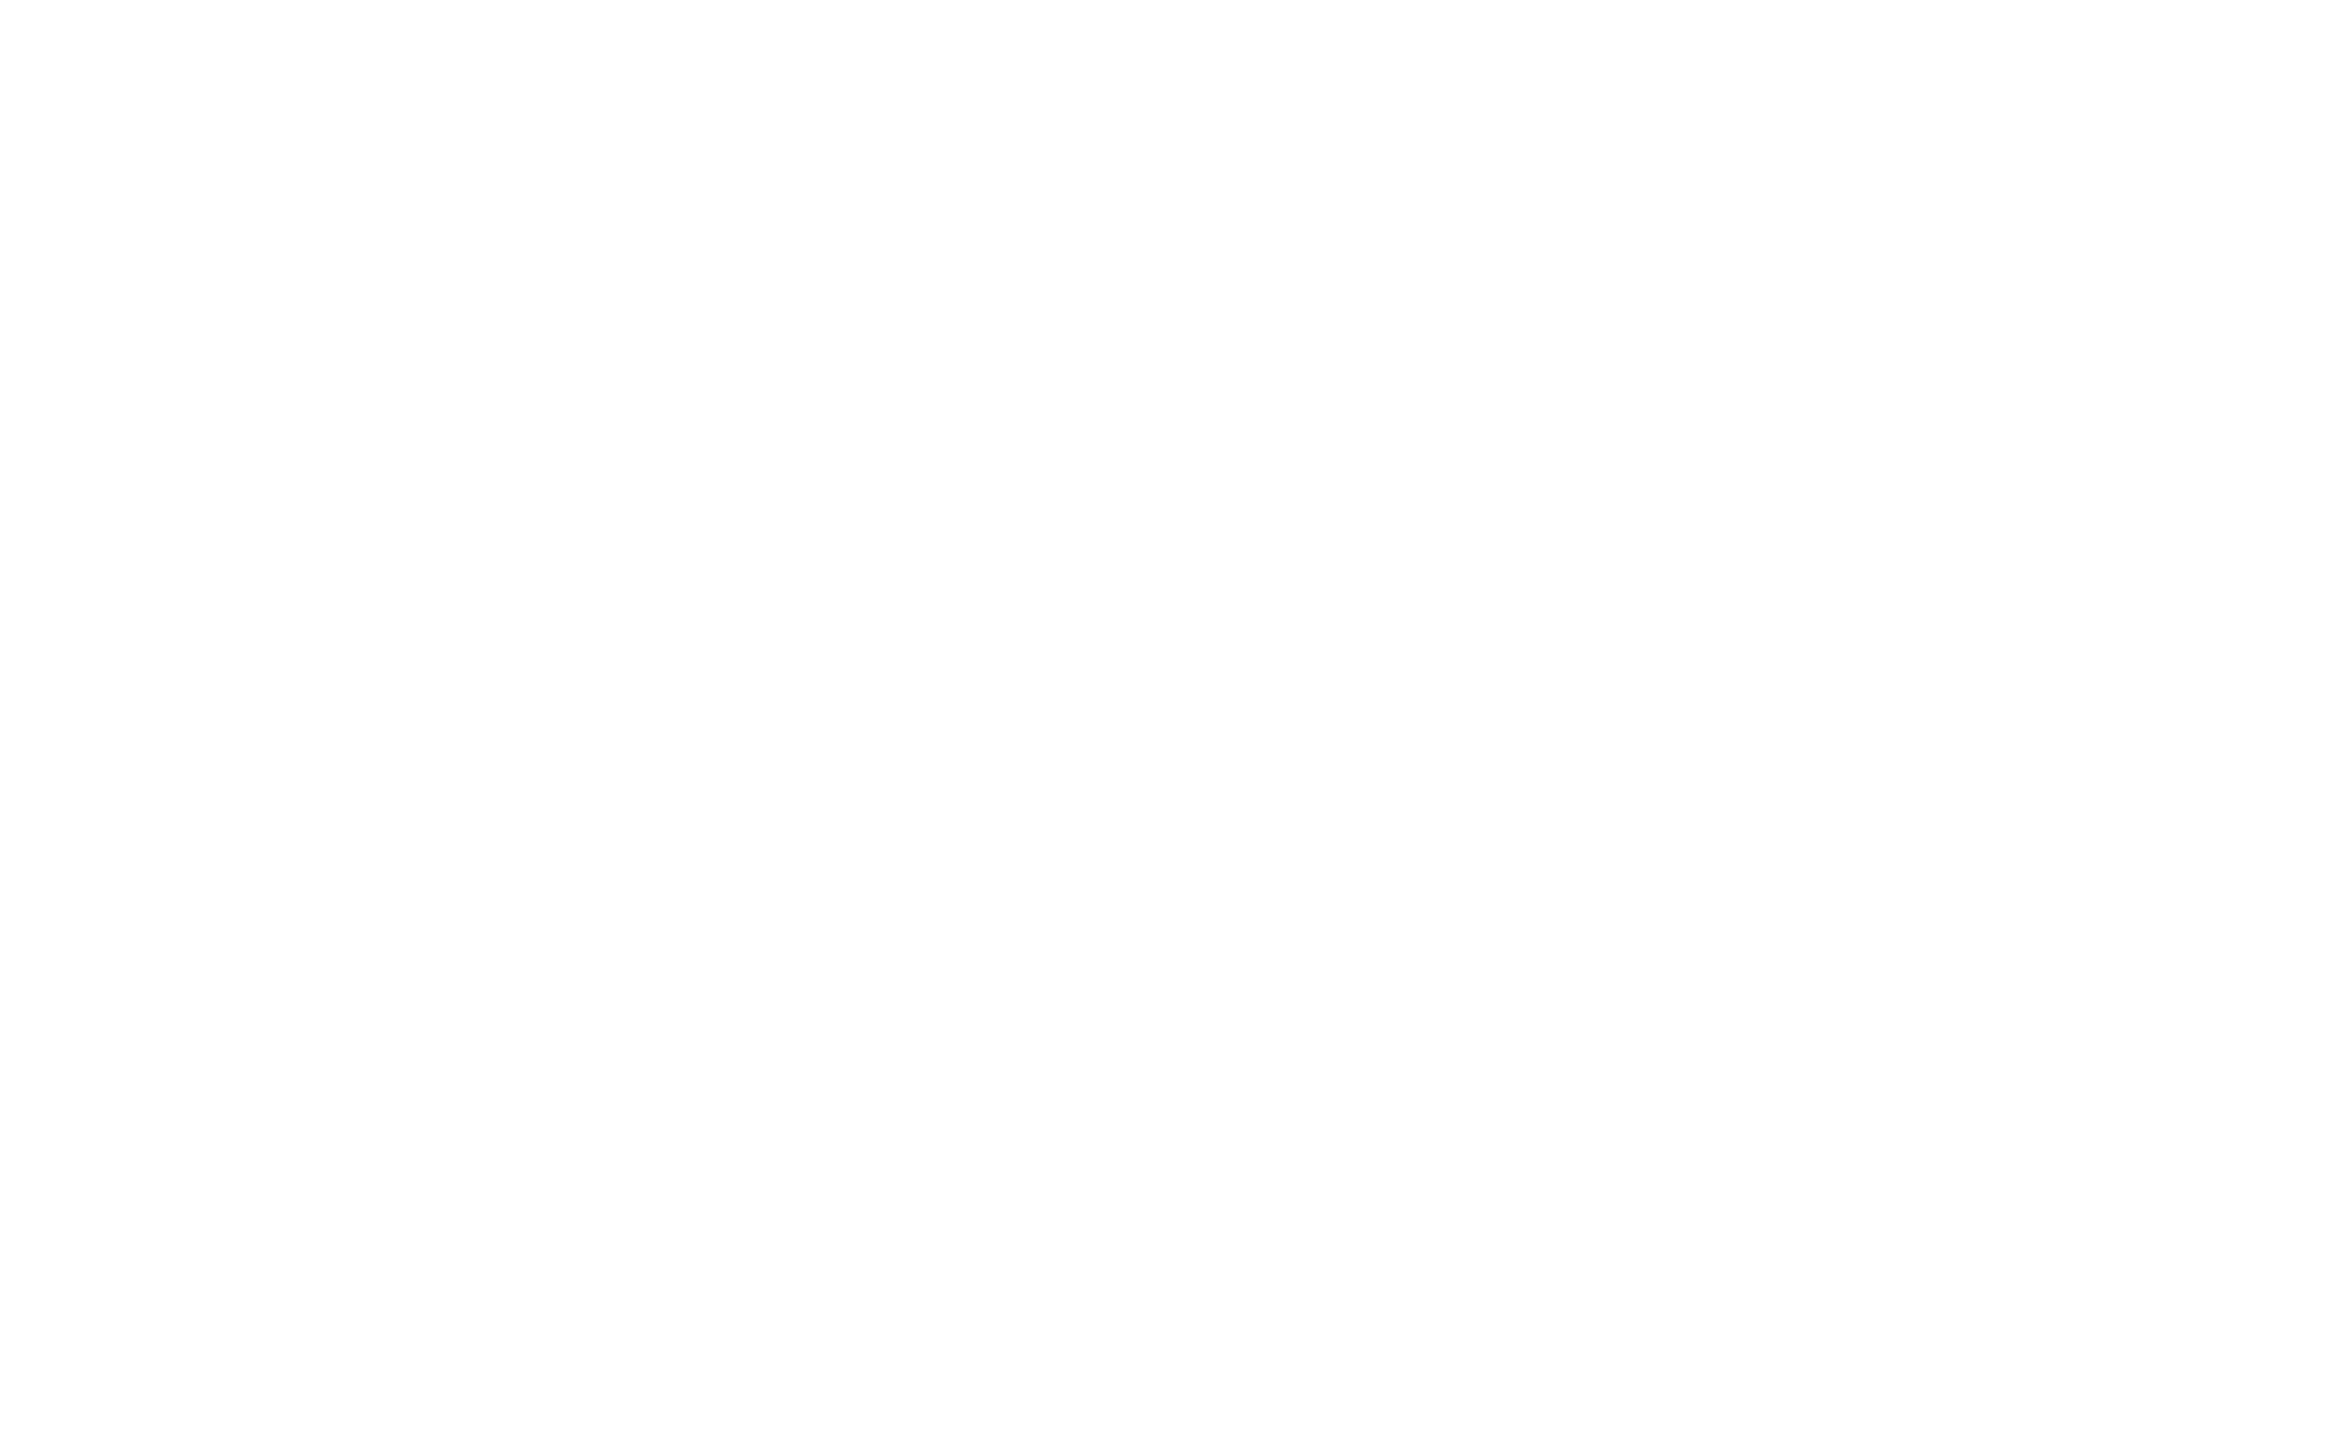 Wellington Orbit